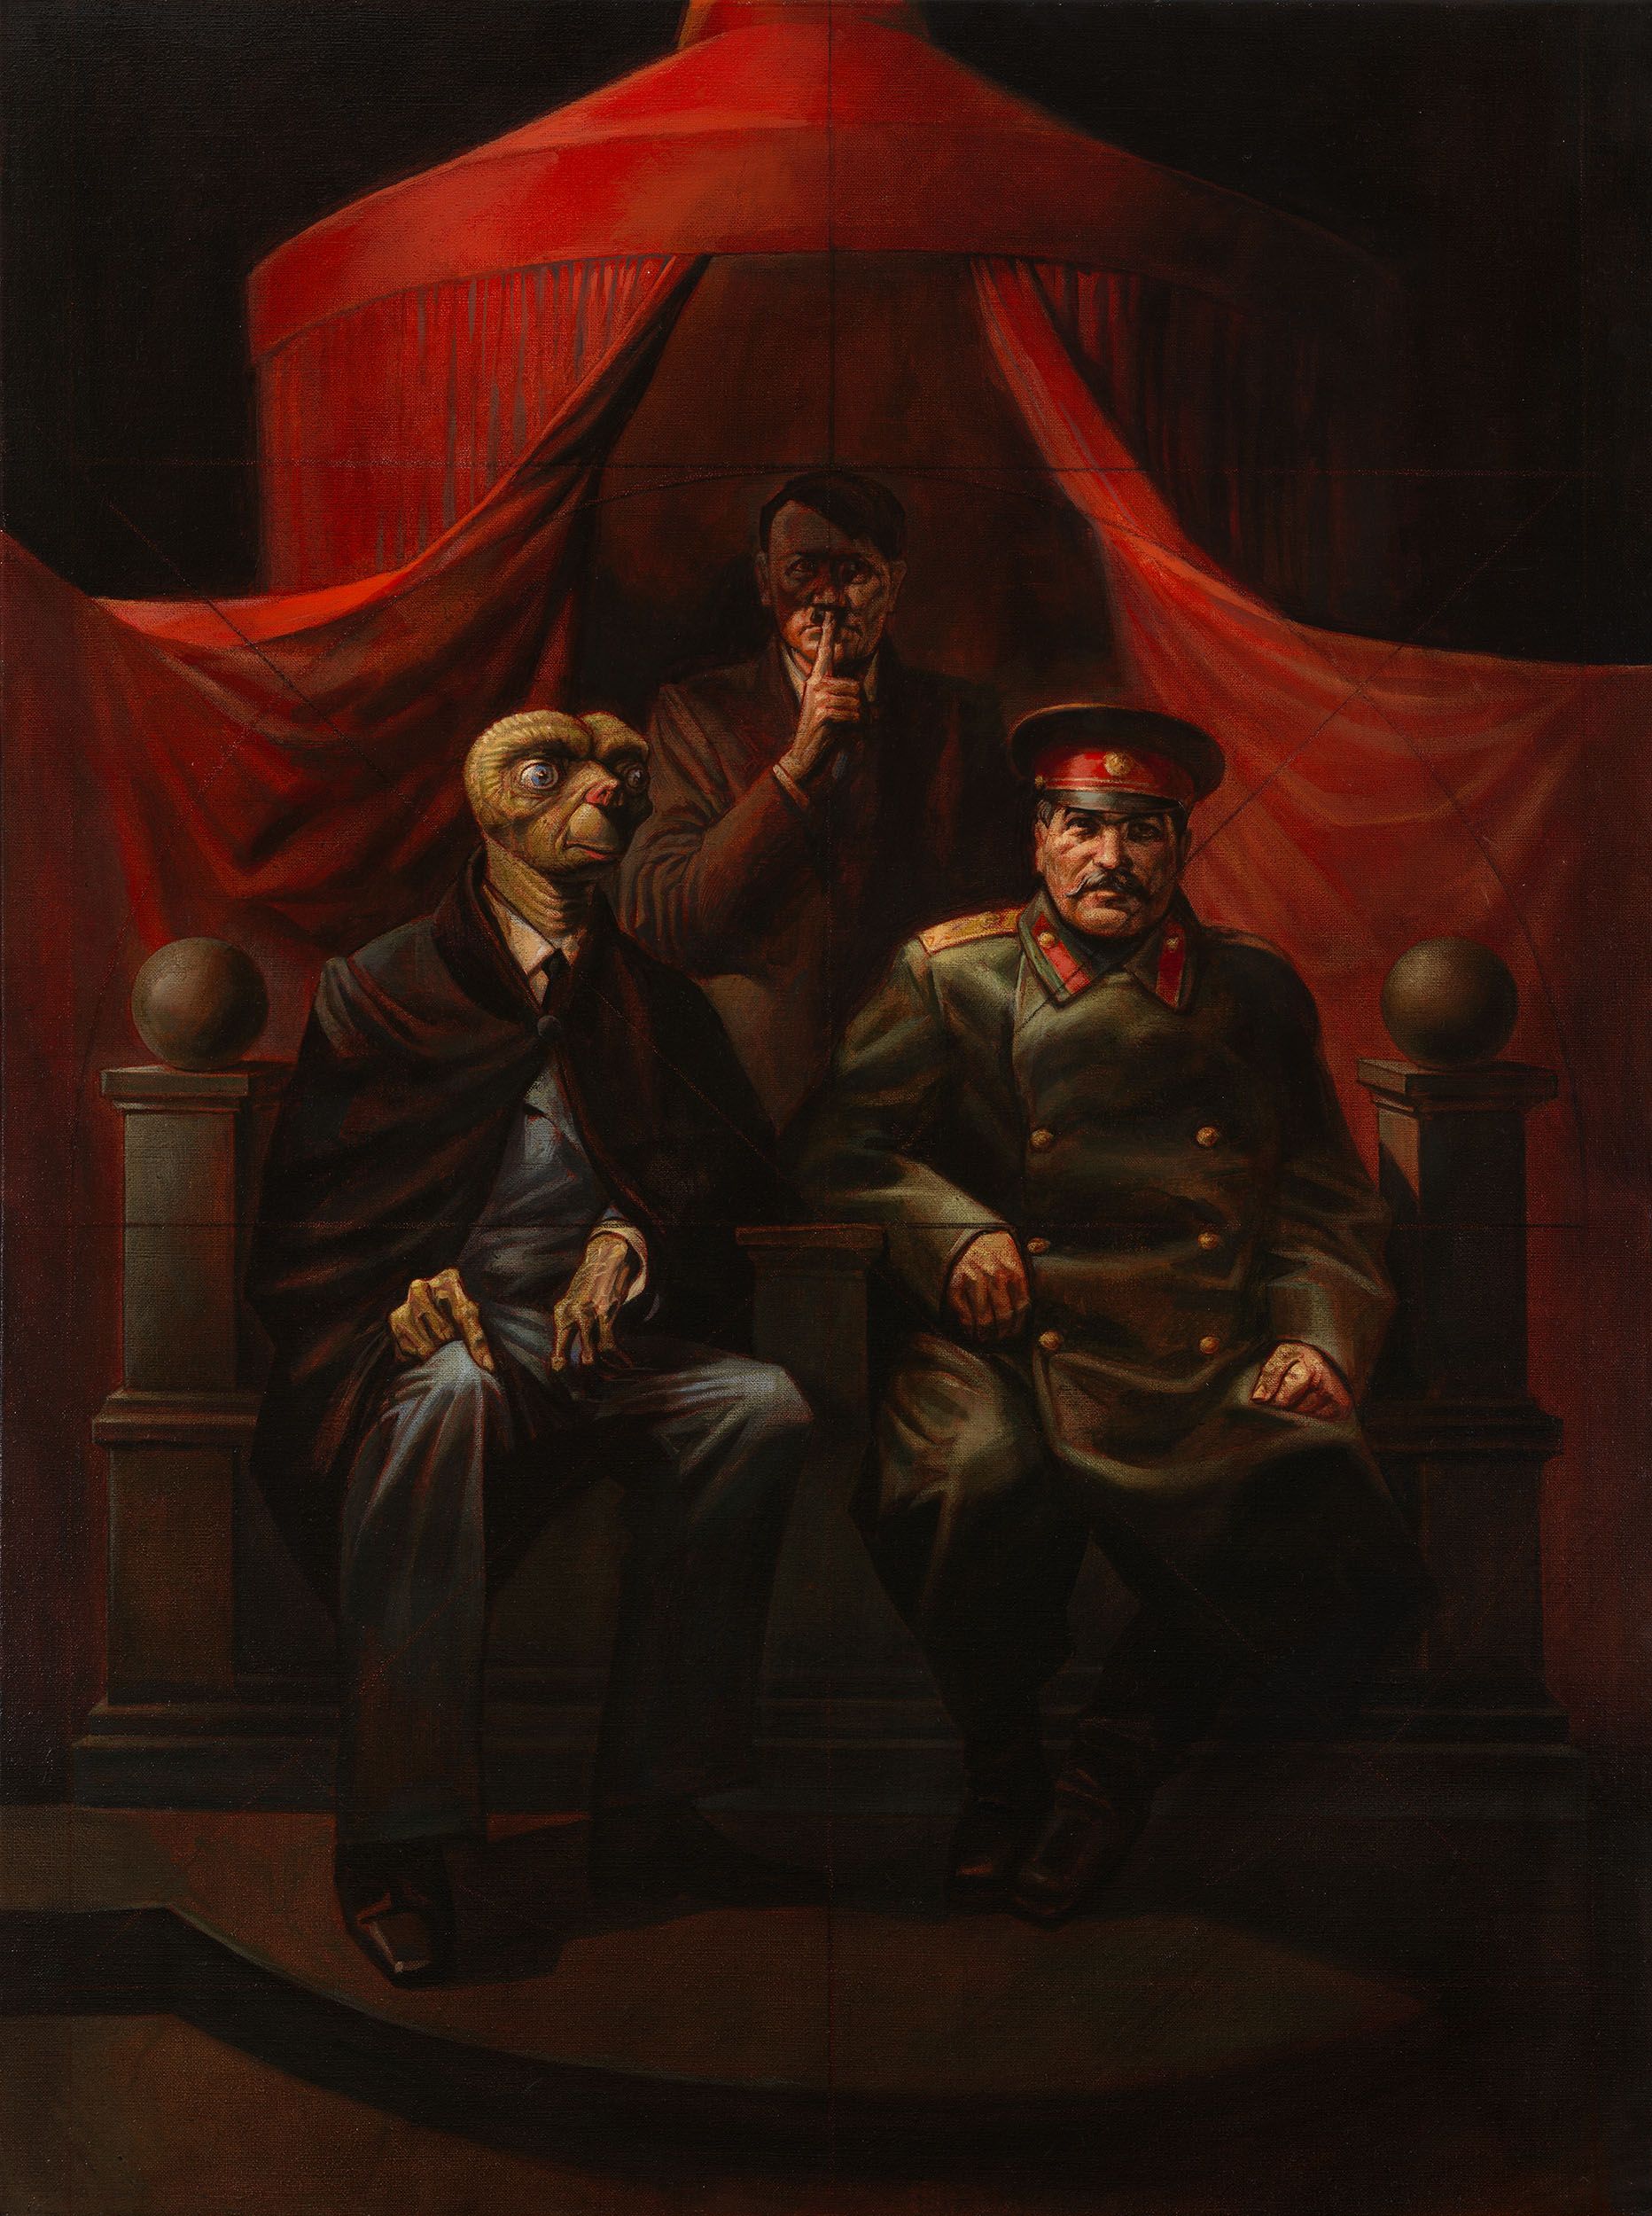 Lot 173, Vitaly Komar, Alexander Melamid, Yalta Conference